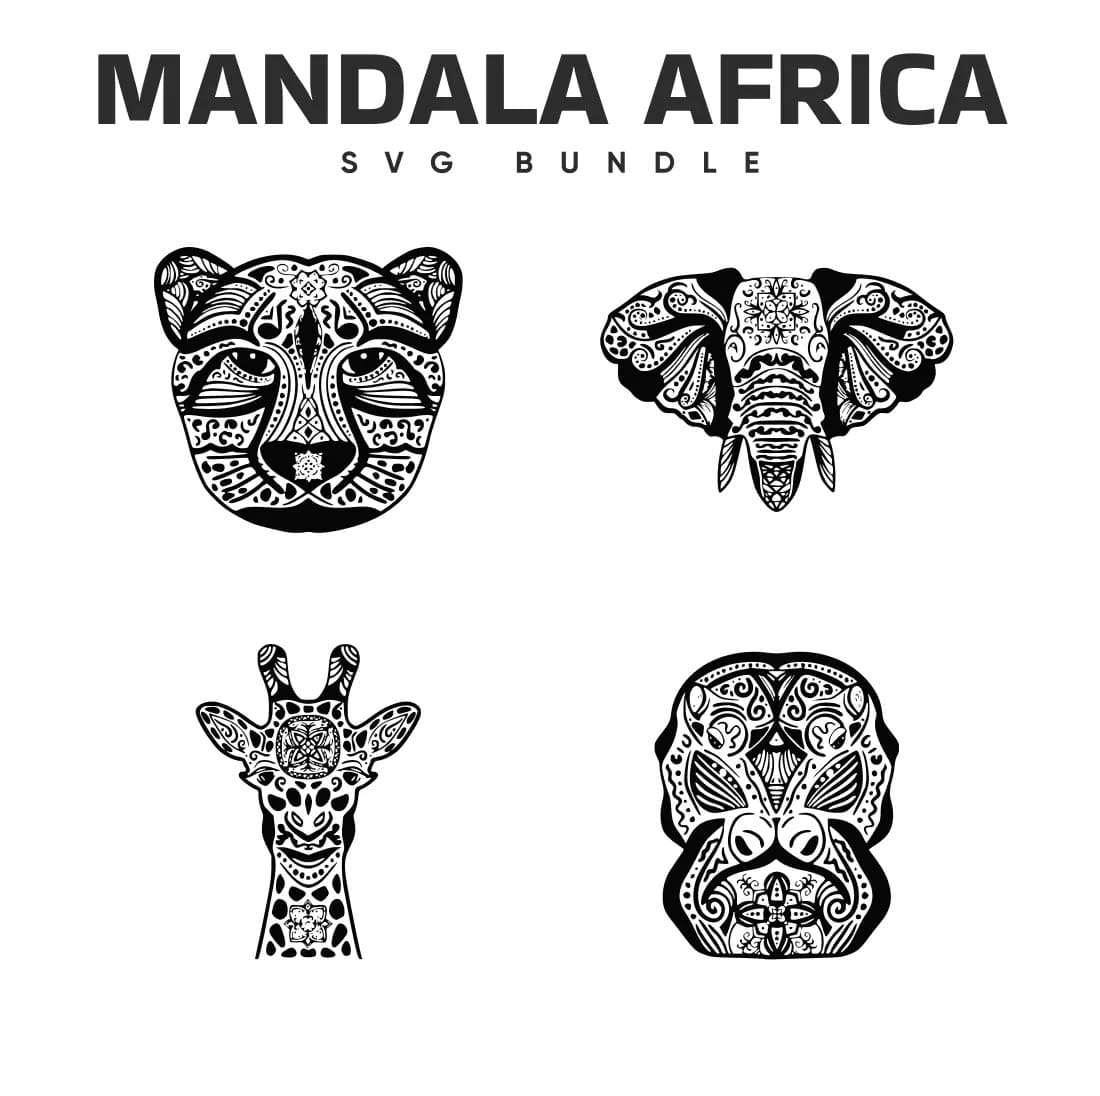 Mandala Africa SVG Bundle Preview.